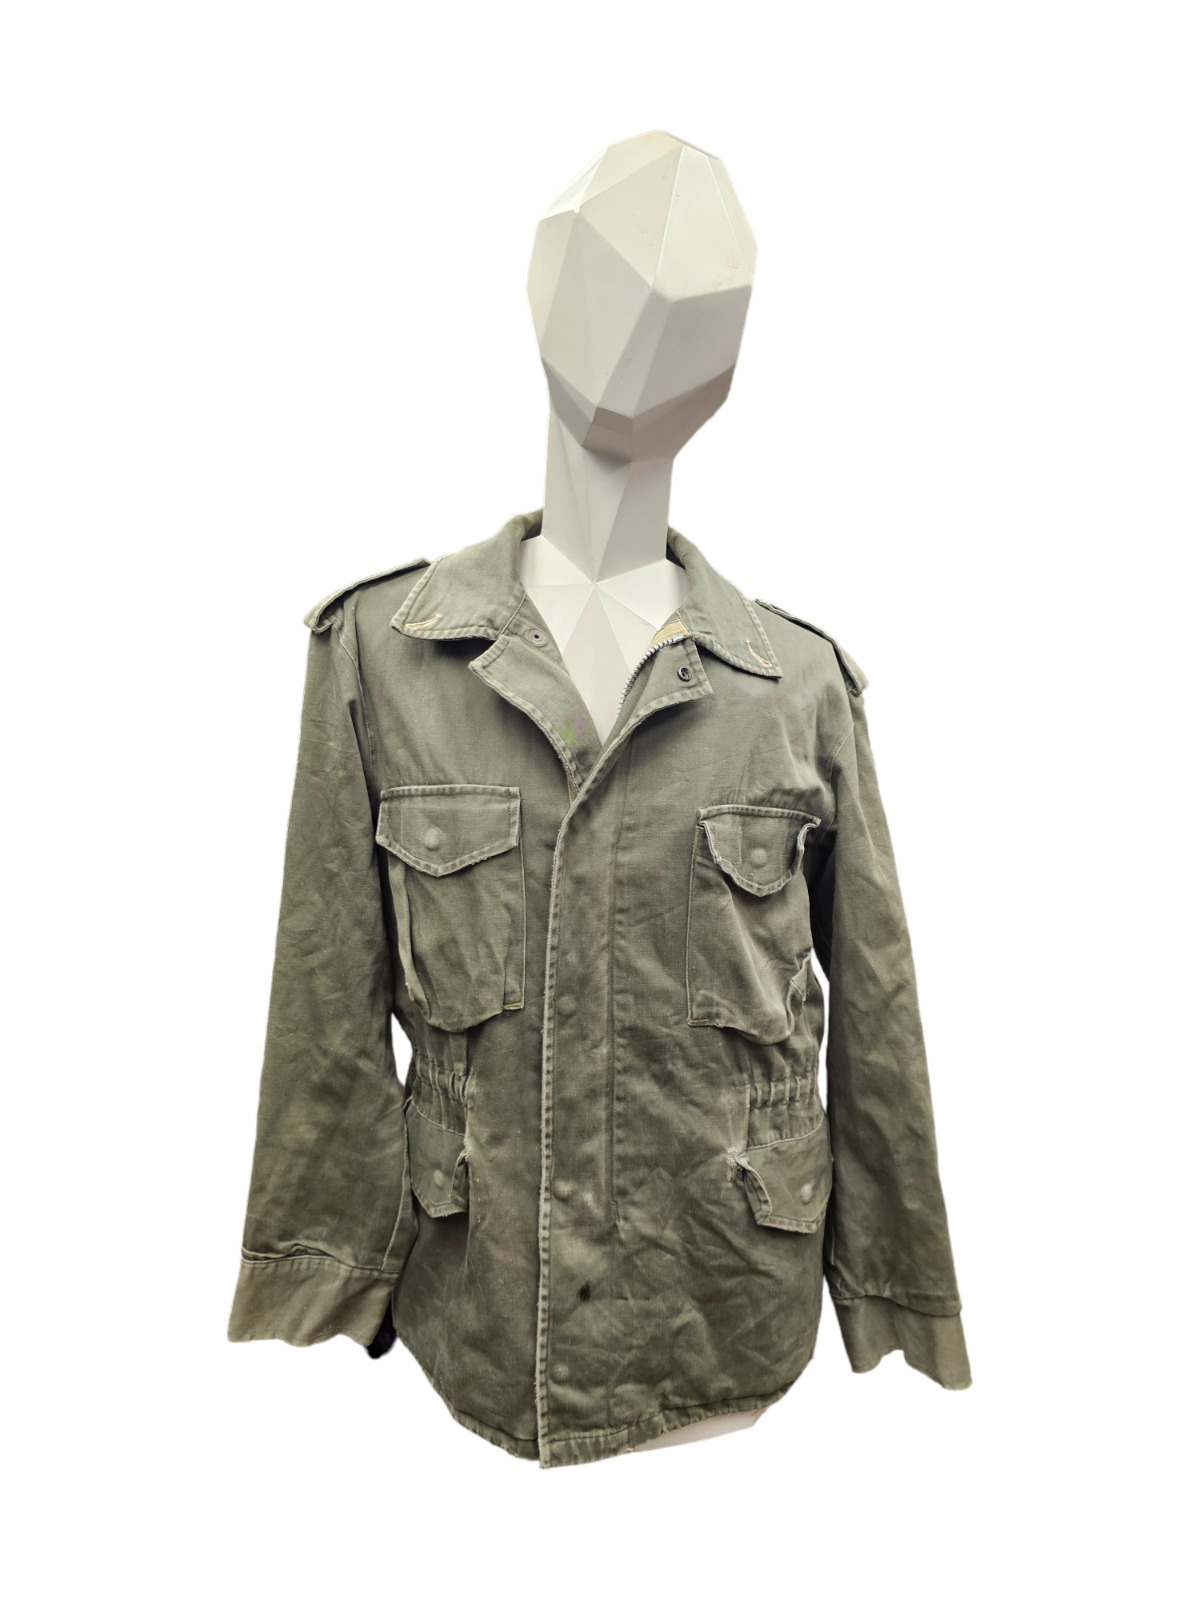 Vintage U.S. Armed Forces M-1950 OD Field Jacket